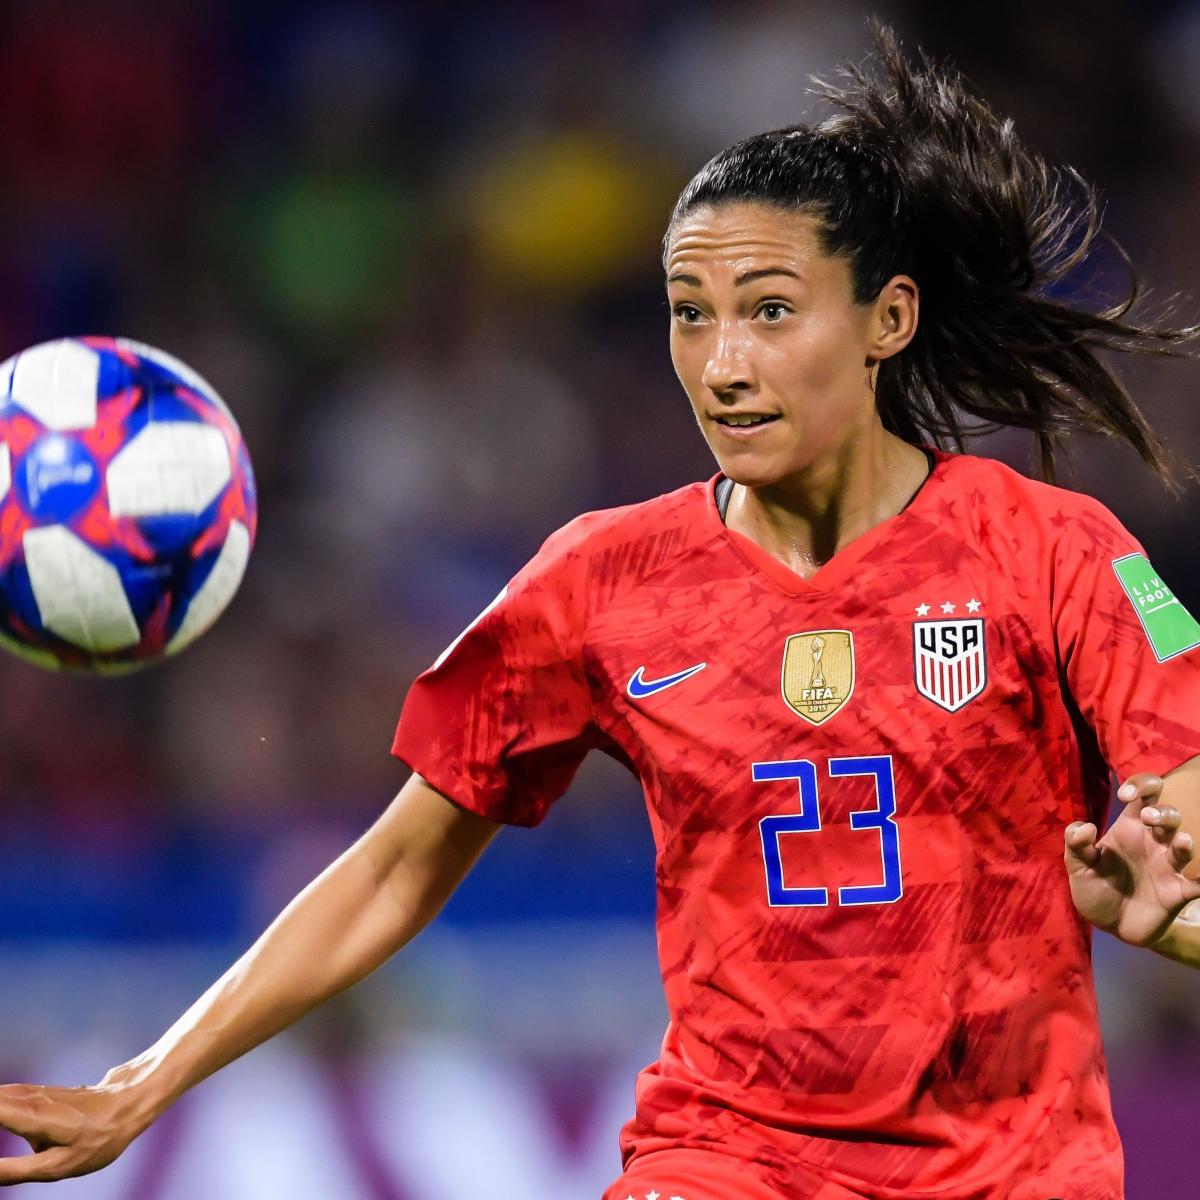 USA vs. Netherlands: 2019 Women's Soccer World Cup Date, Start Time